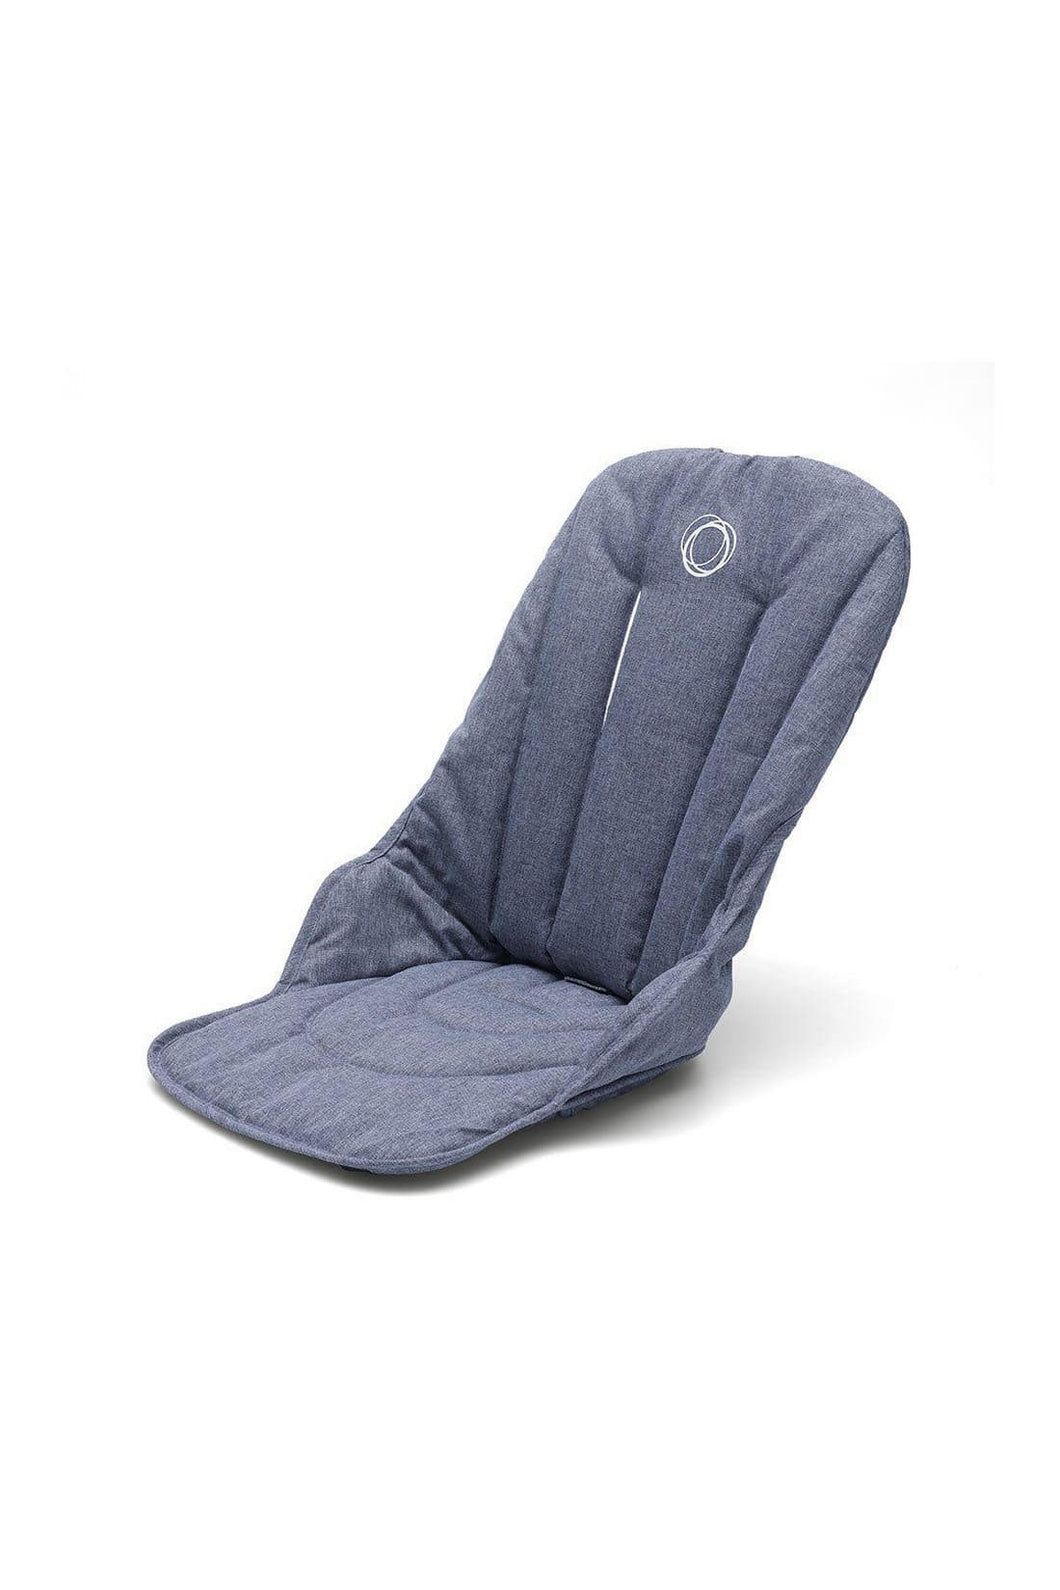 Bugaboo Fox Seat Fabric - Blue Melange